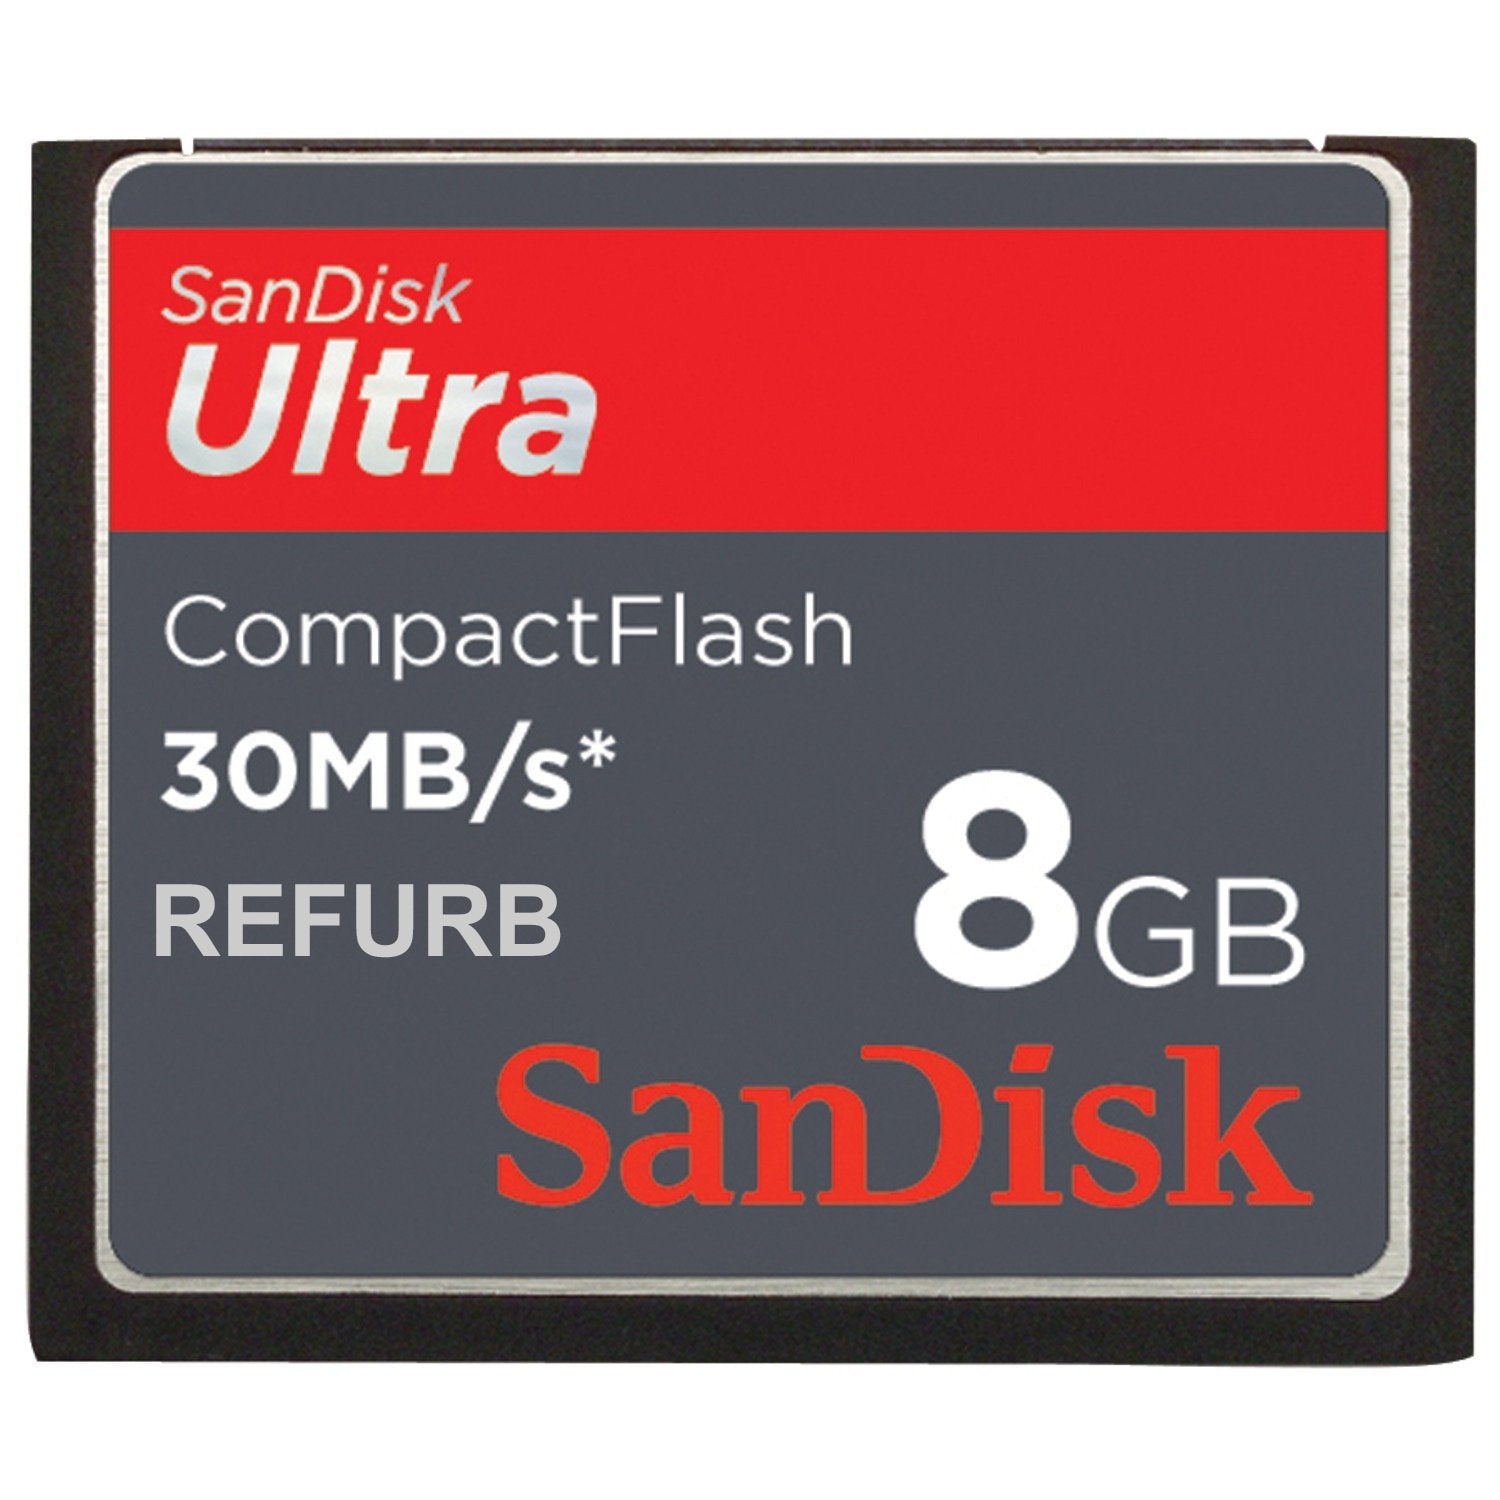 SanDisk 8GB/30MB Ultra CF Card SDCFH-008G-A11 (Certified Refurbished)